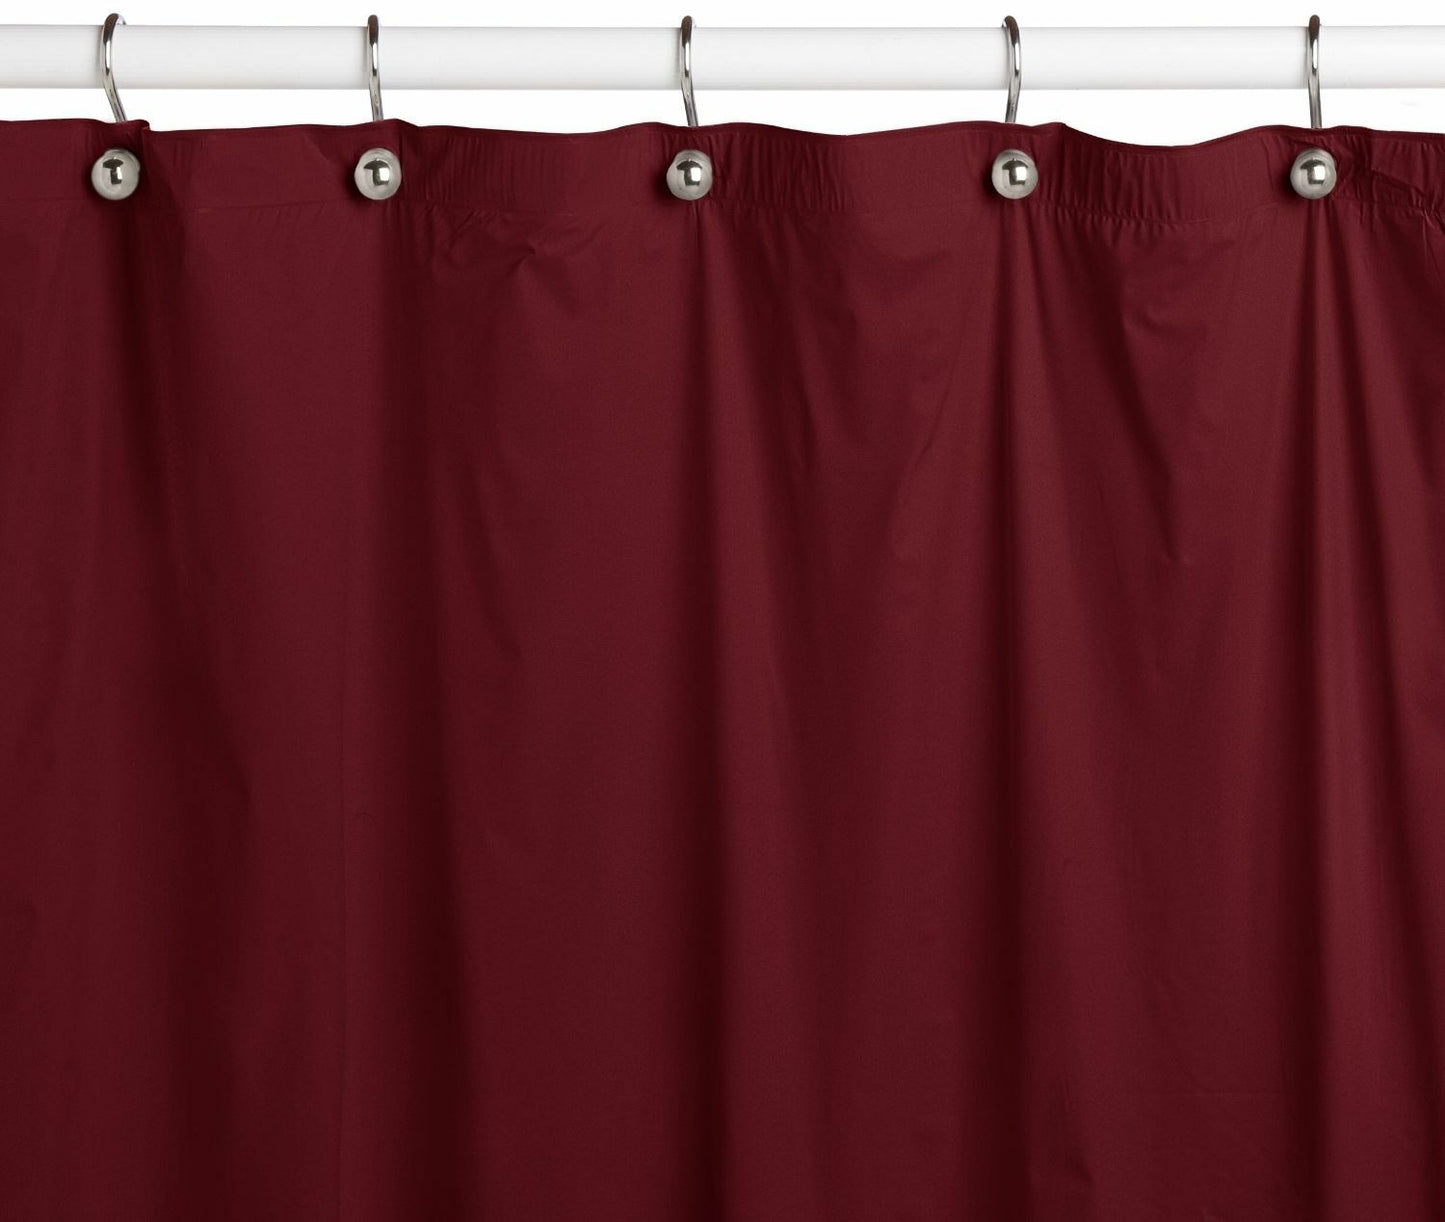 Shower Curtains - Vinyl Shower Curtain Liner - 21 Colors & Patterns - Burgundy